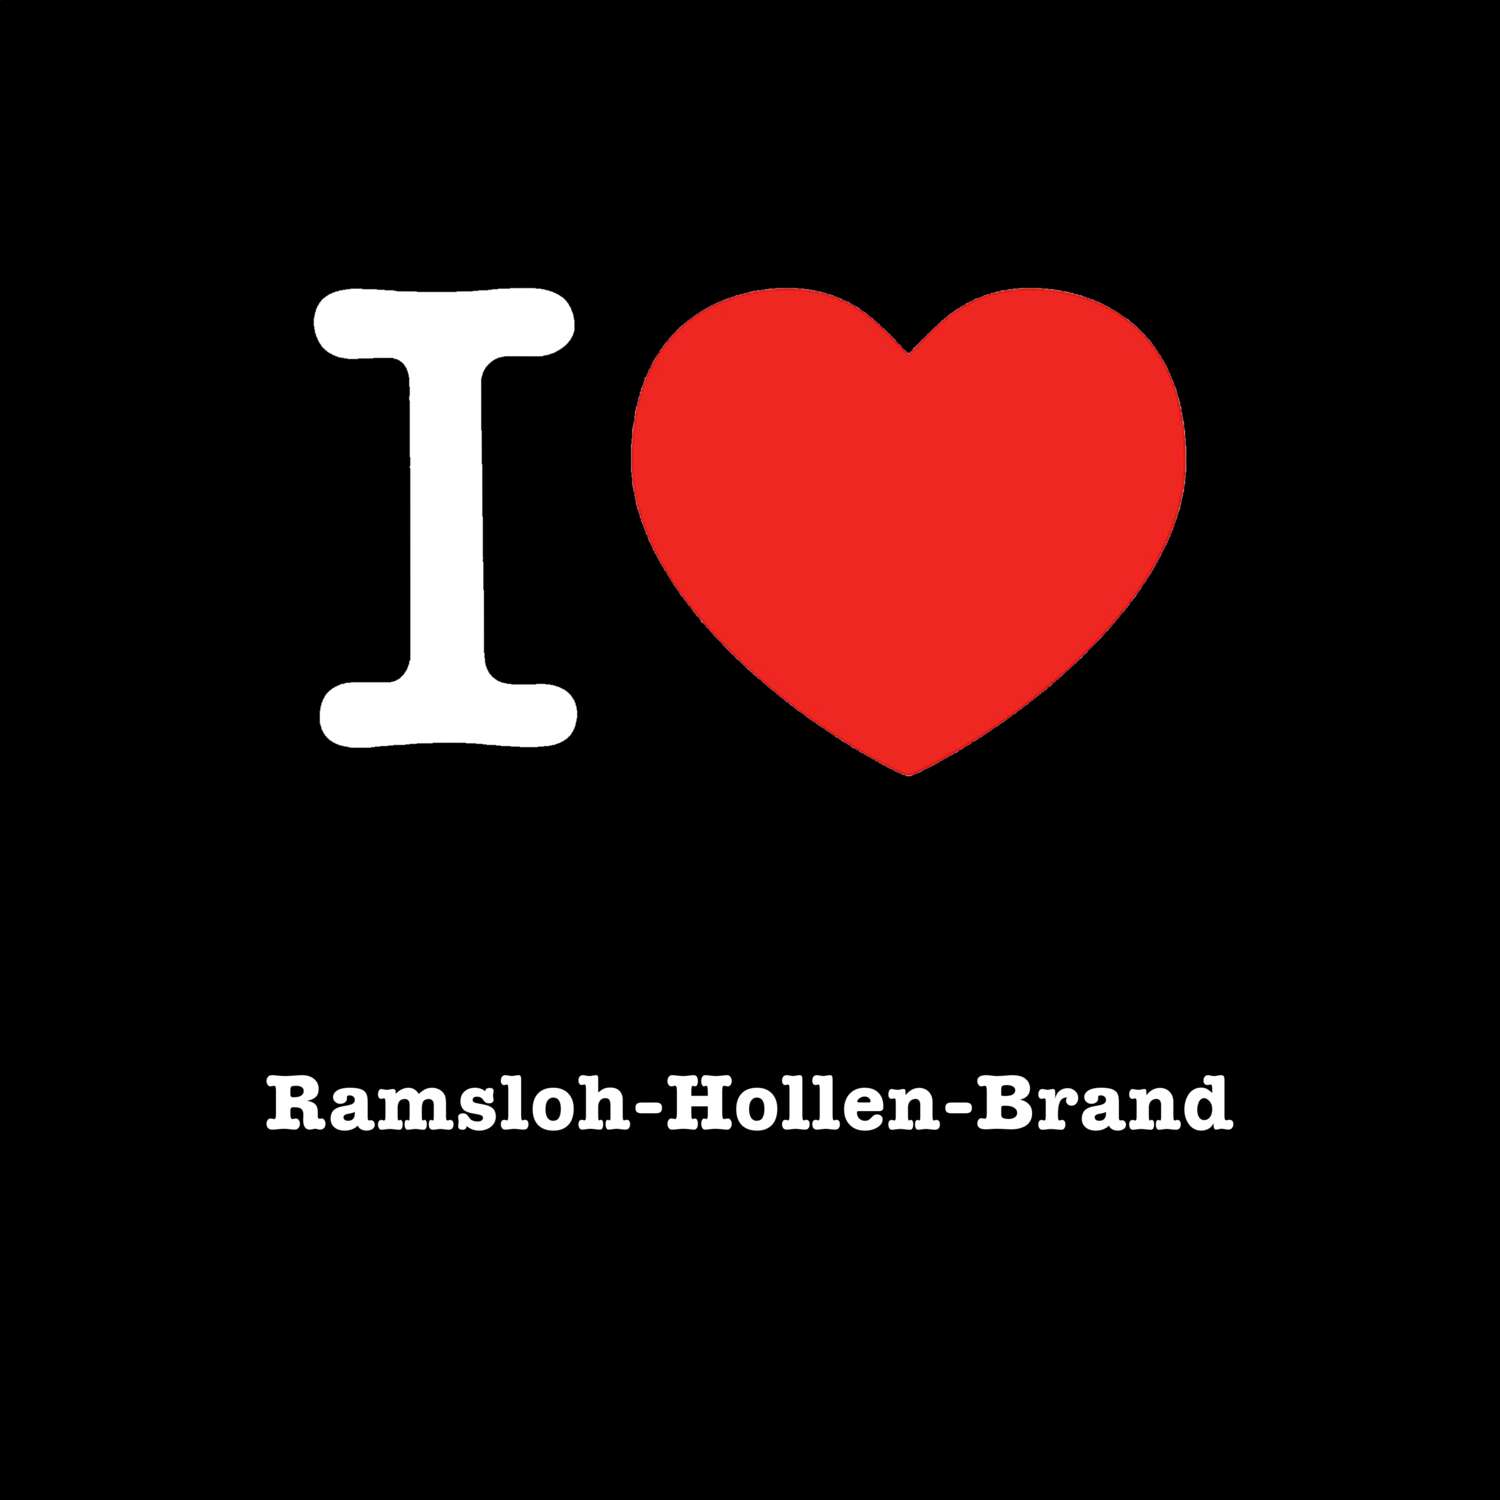 Ramsloh-Hollen-Brand T-Shirt »I love«